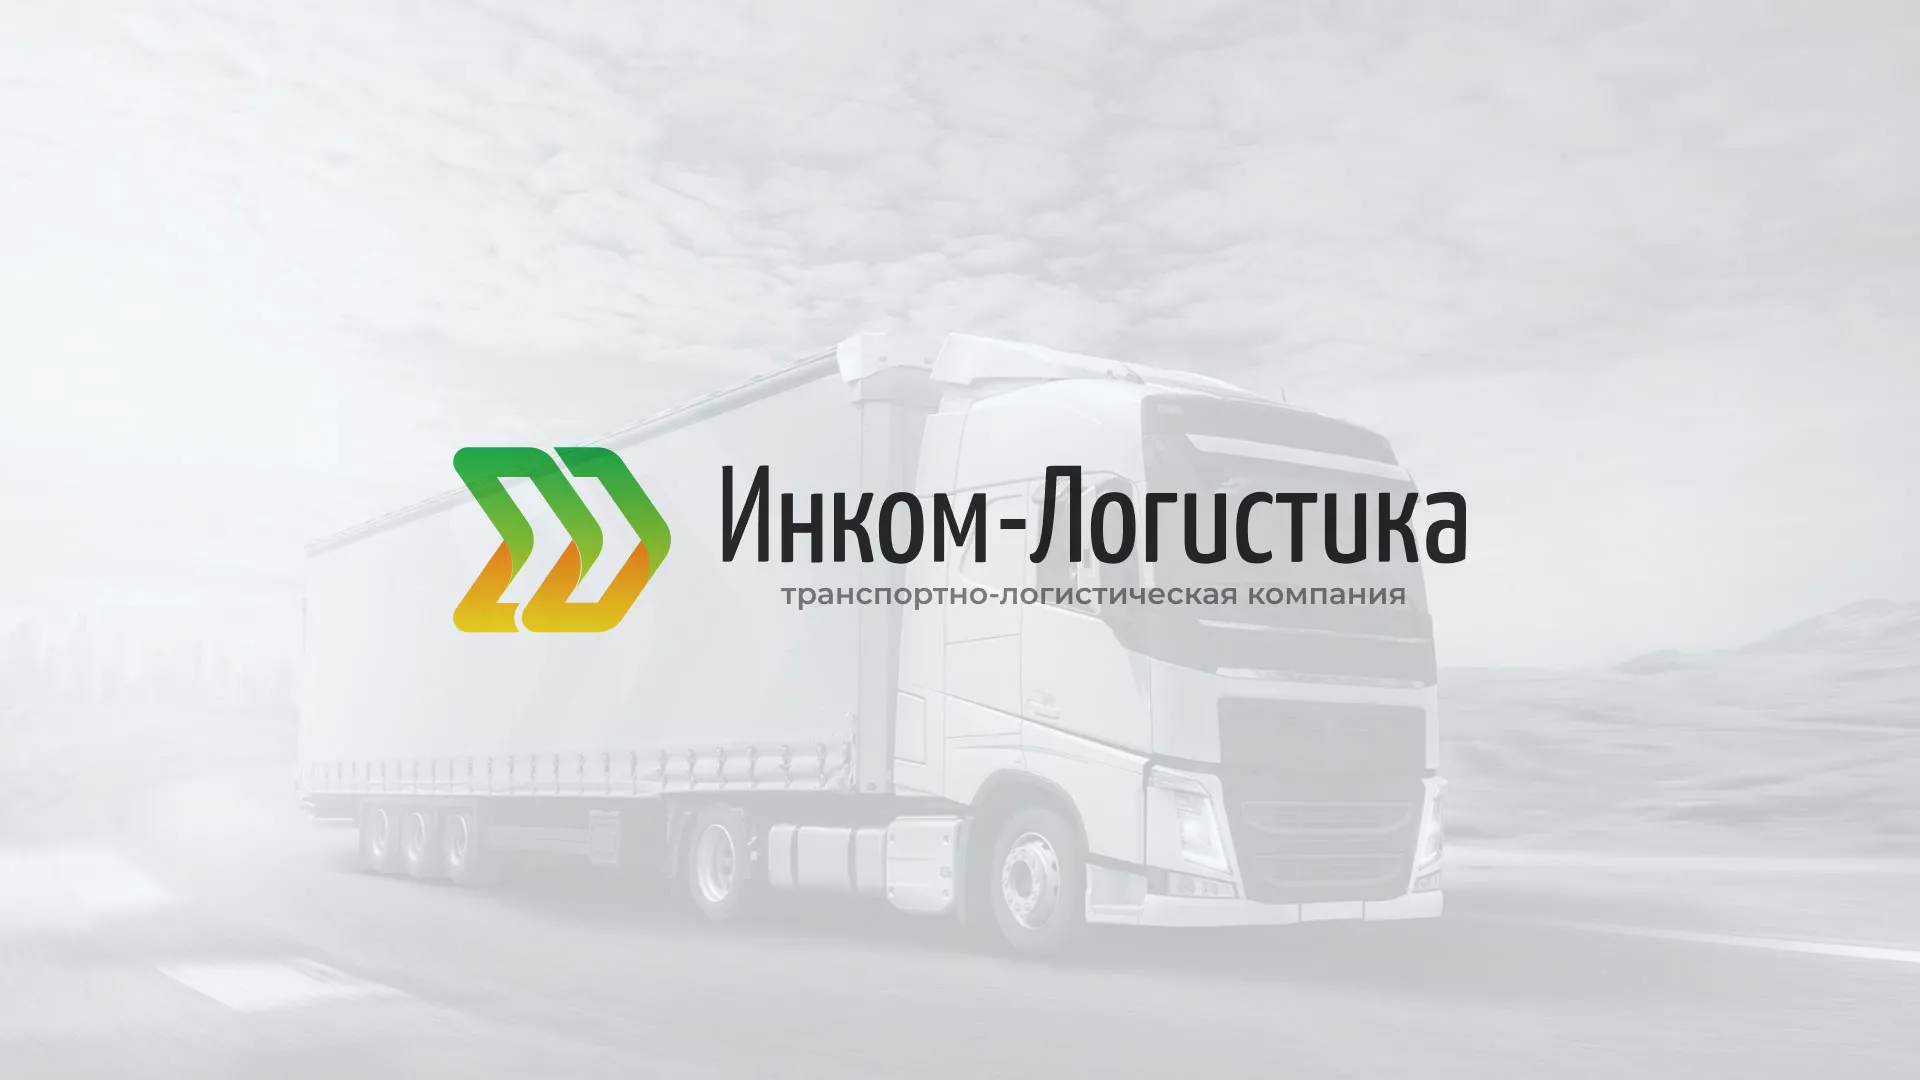 Разработка логотипа и сайта компании «Инком-Логистика» в Борисоглебске